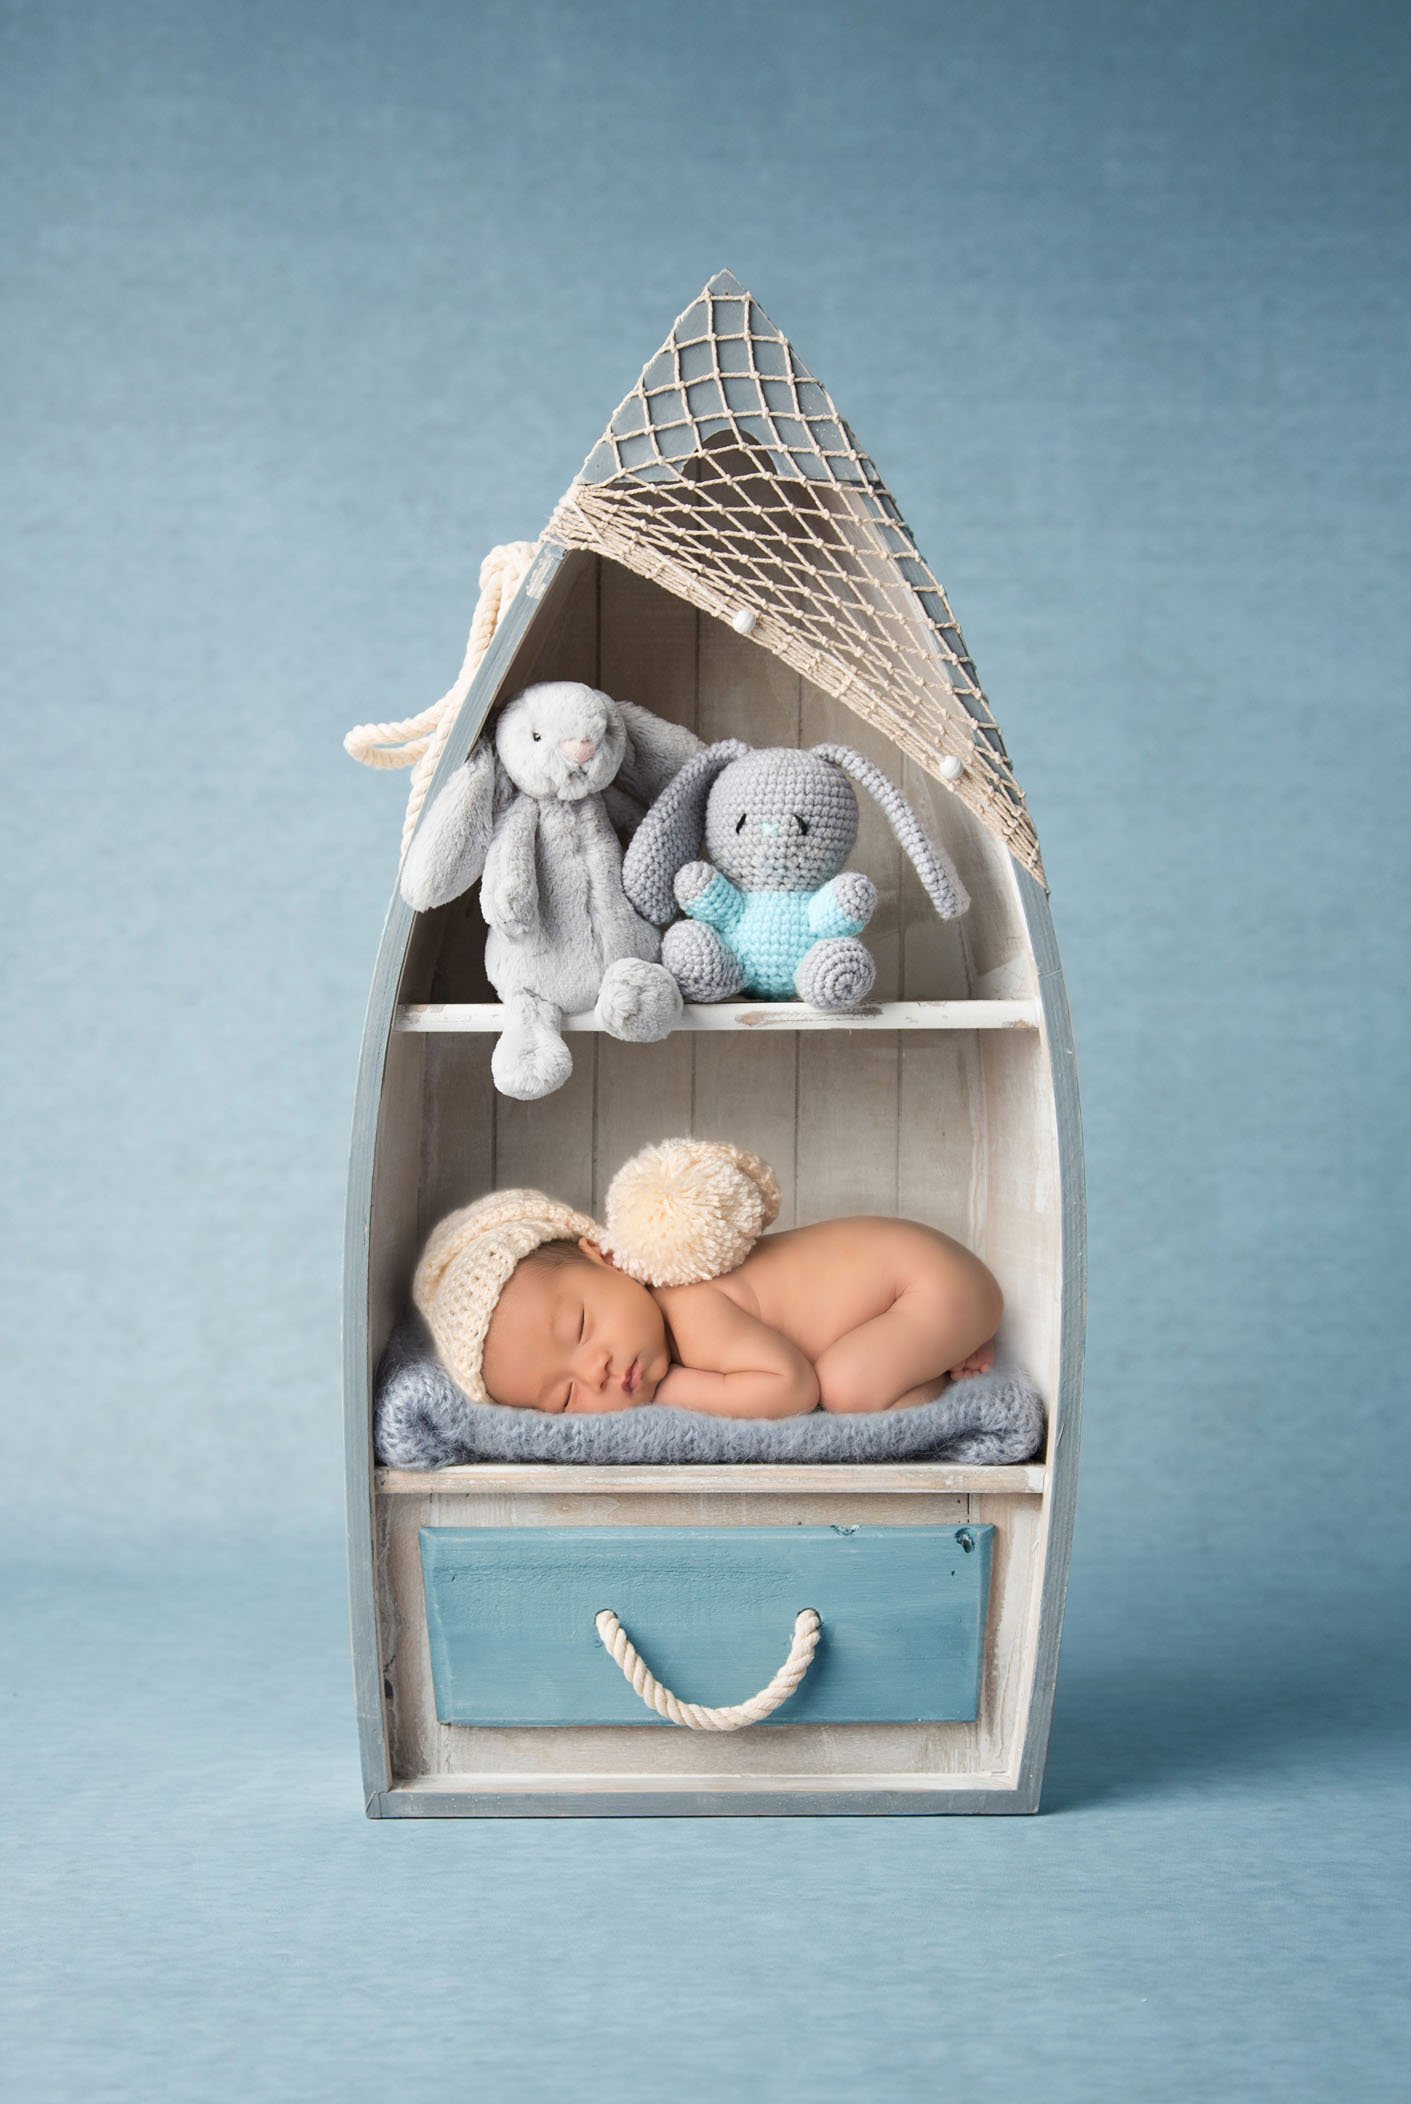 adorable newborn photo newborn baby sleeping in boat cabinet with stuffed animals